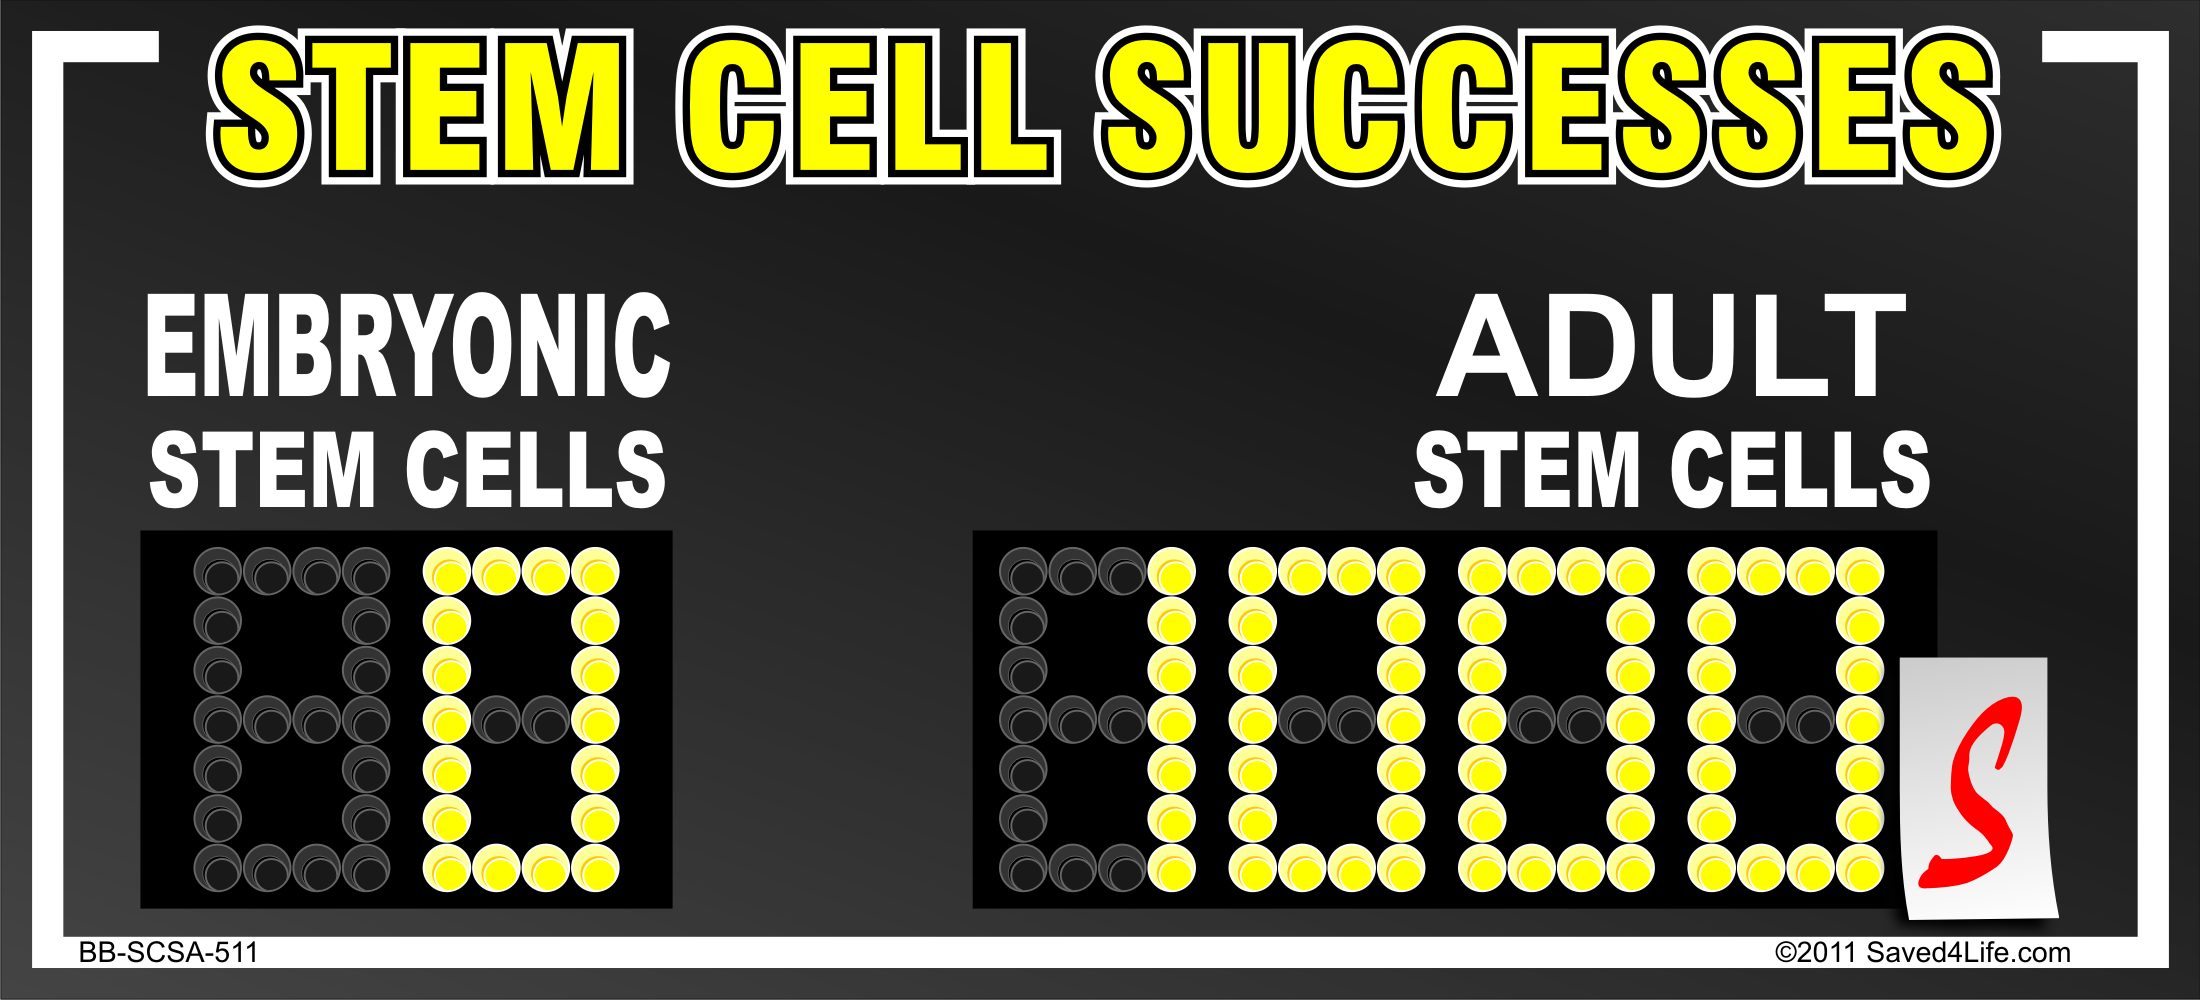 Stem Cell Successes - SCOREBOARD